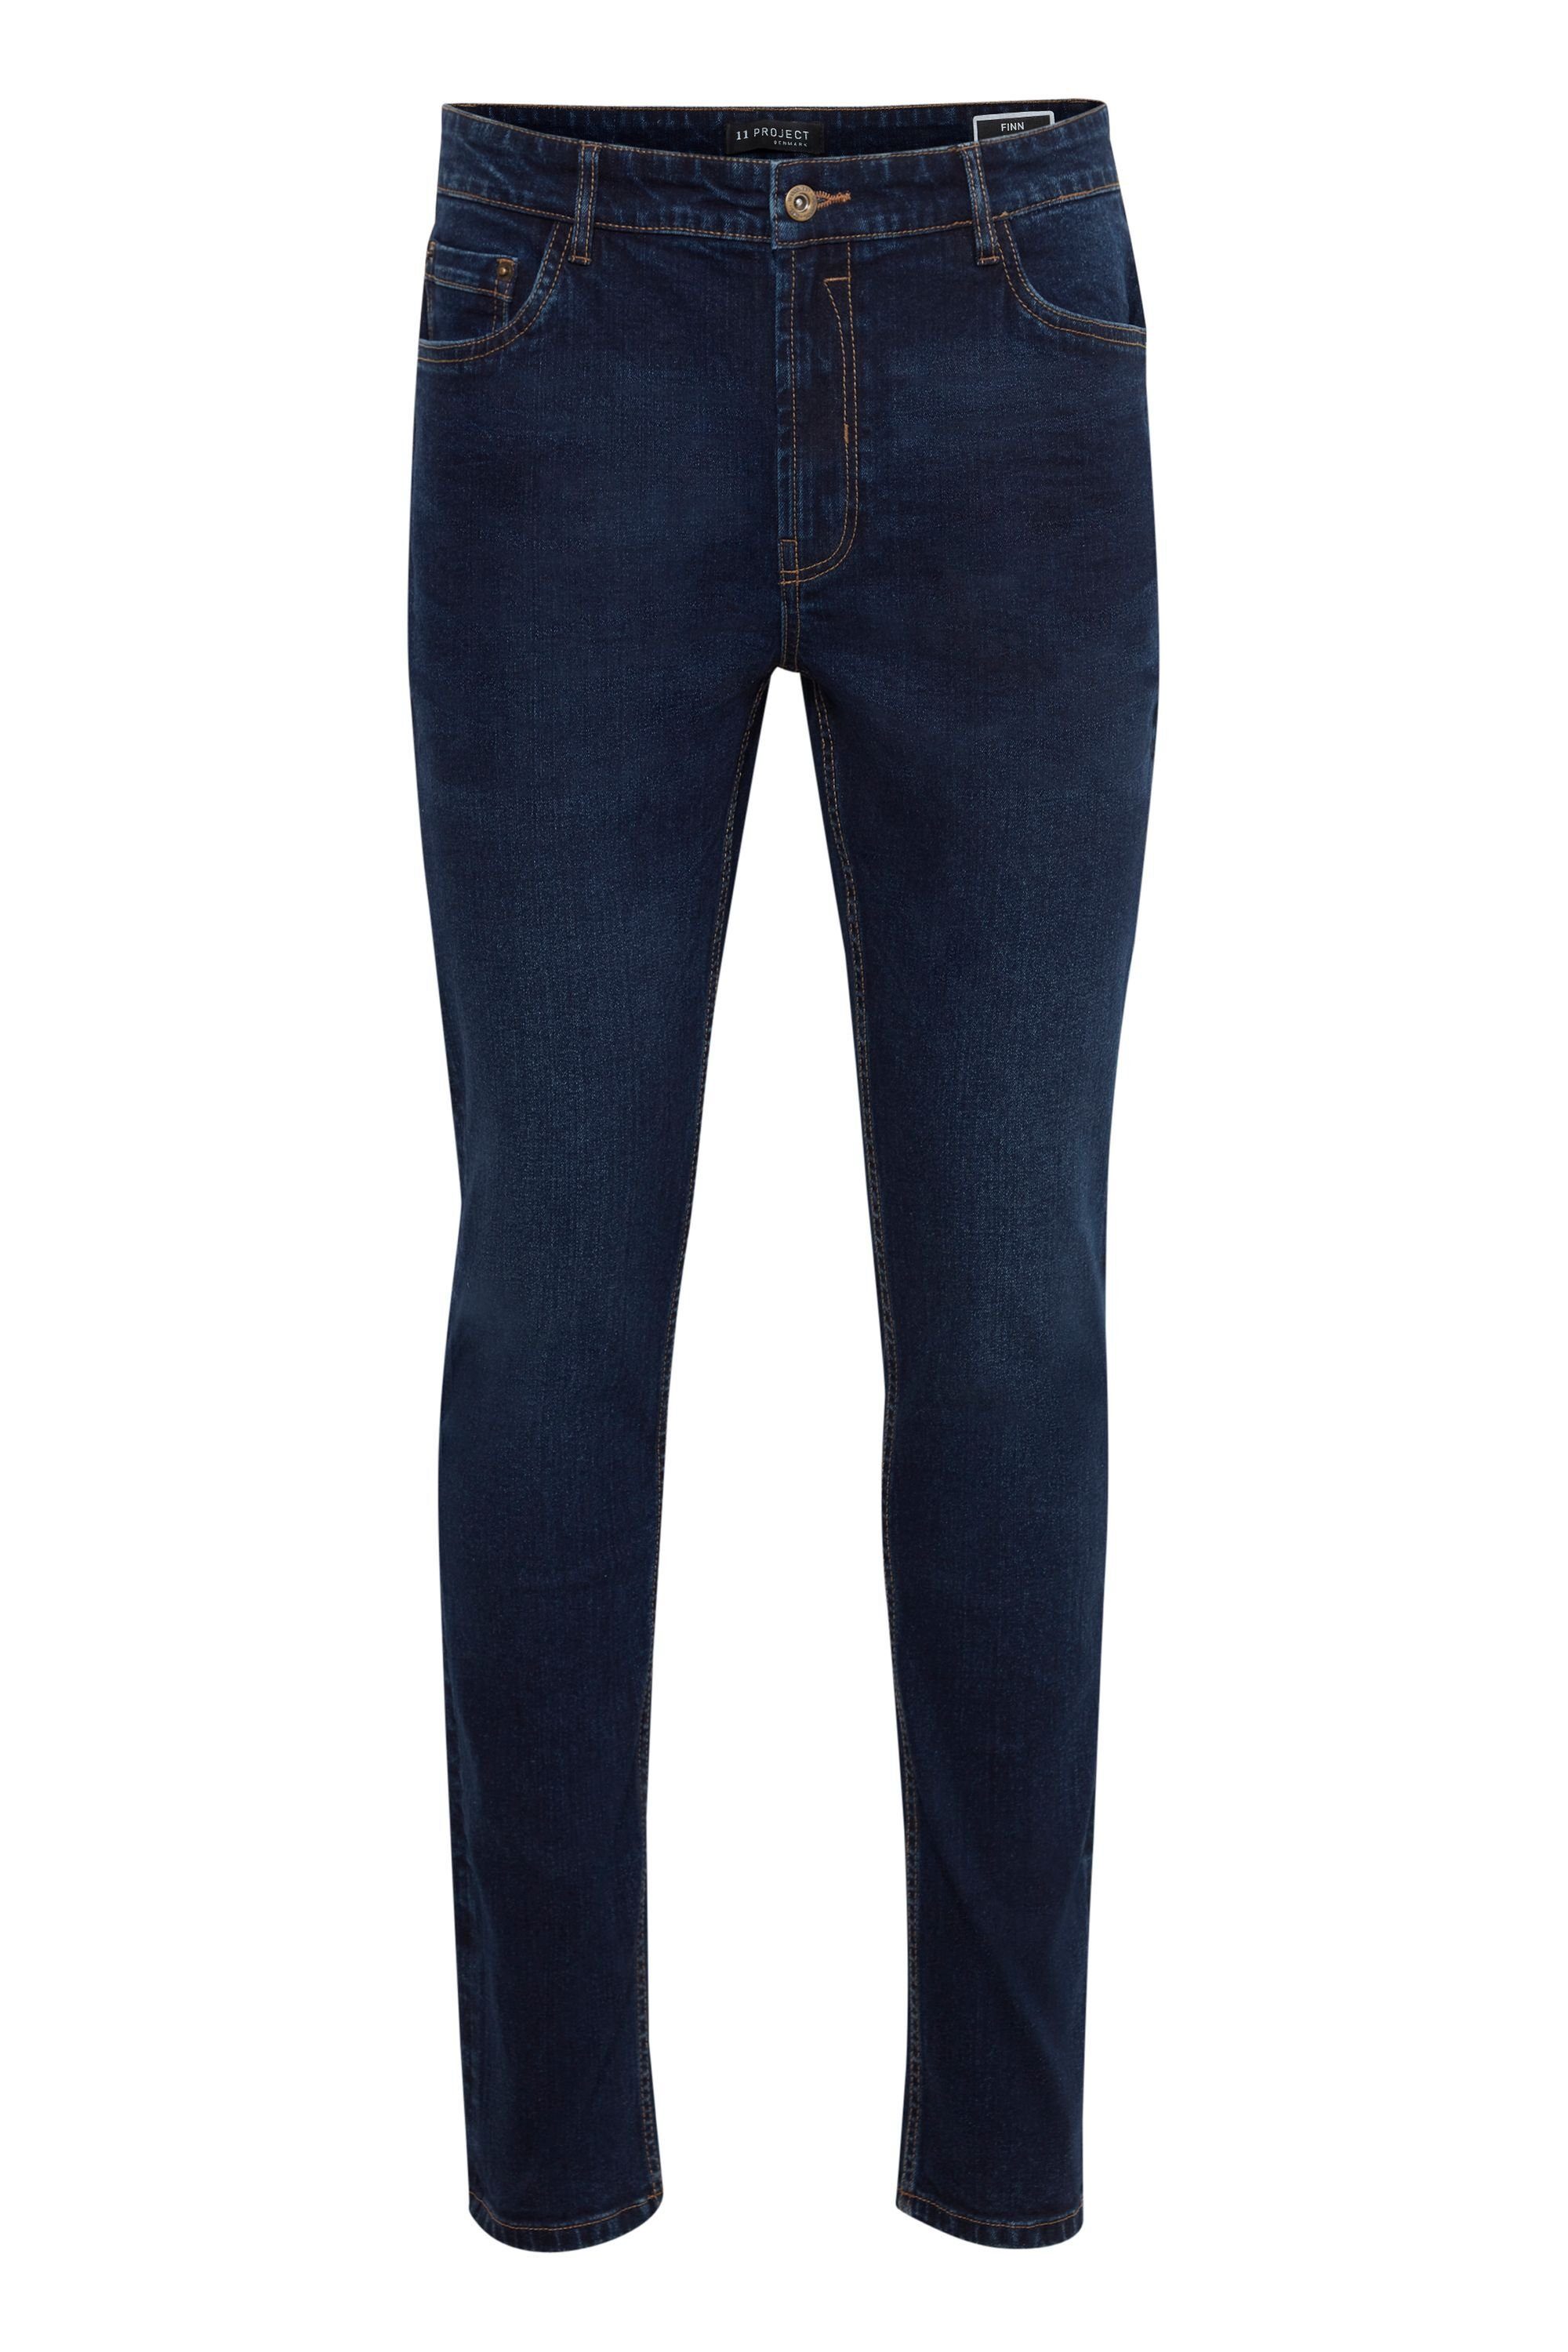 11 Project PRBetto Blue Denim Project 5-Pocket-Jeans 11 Dark